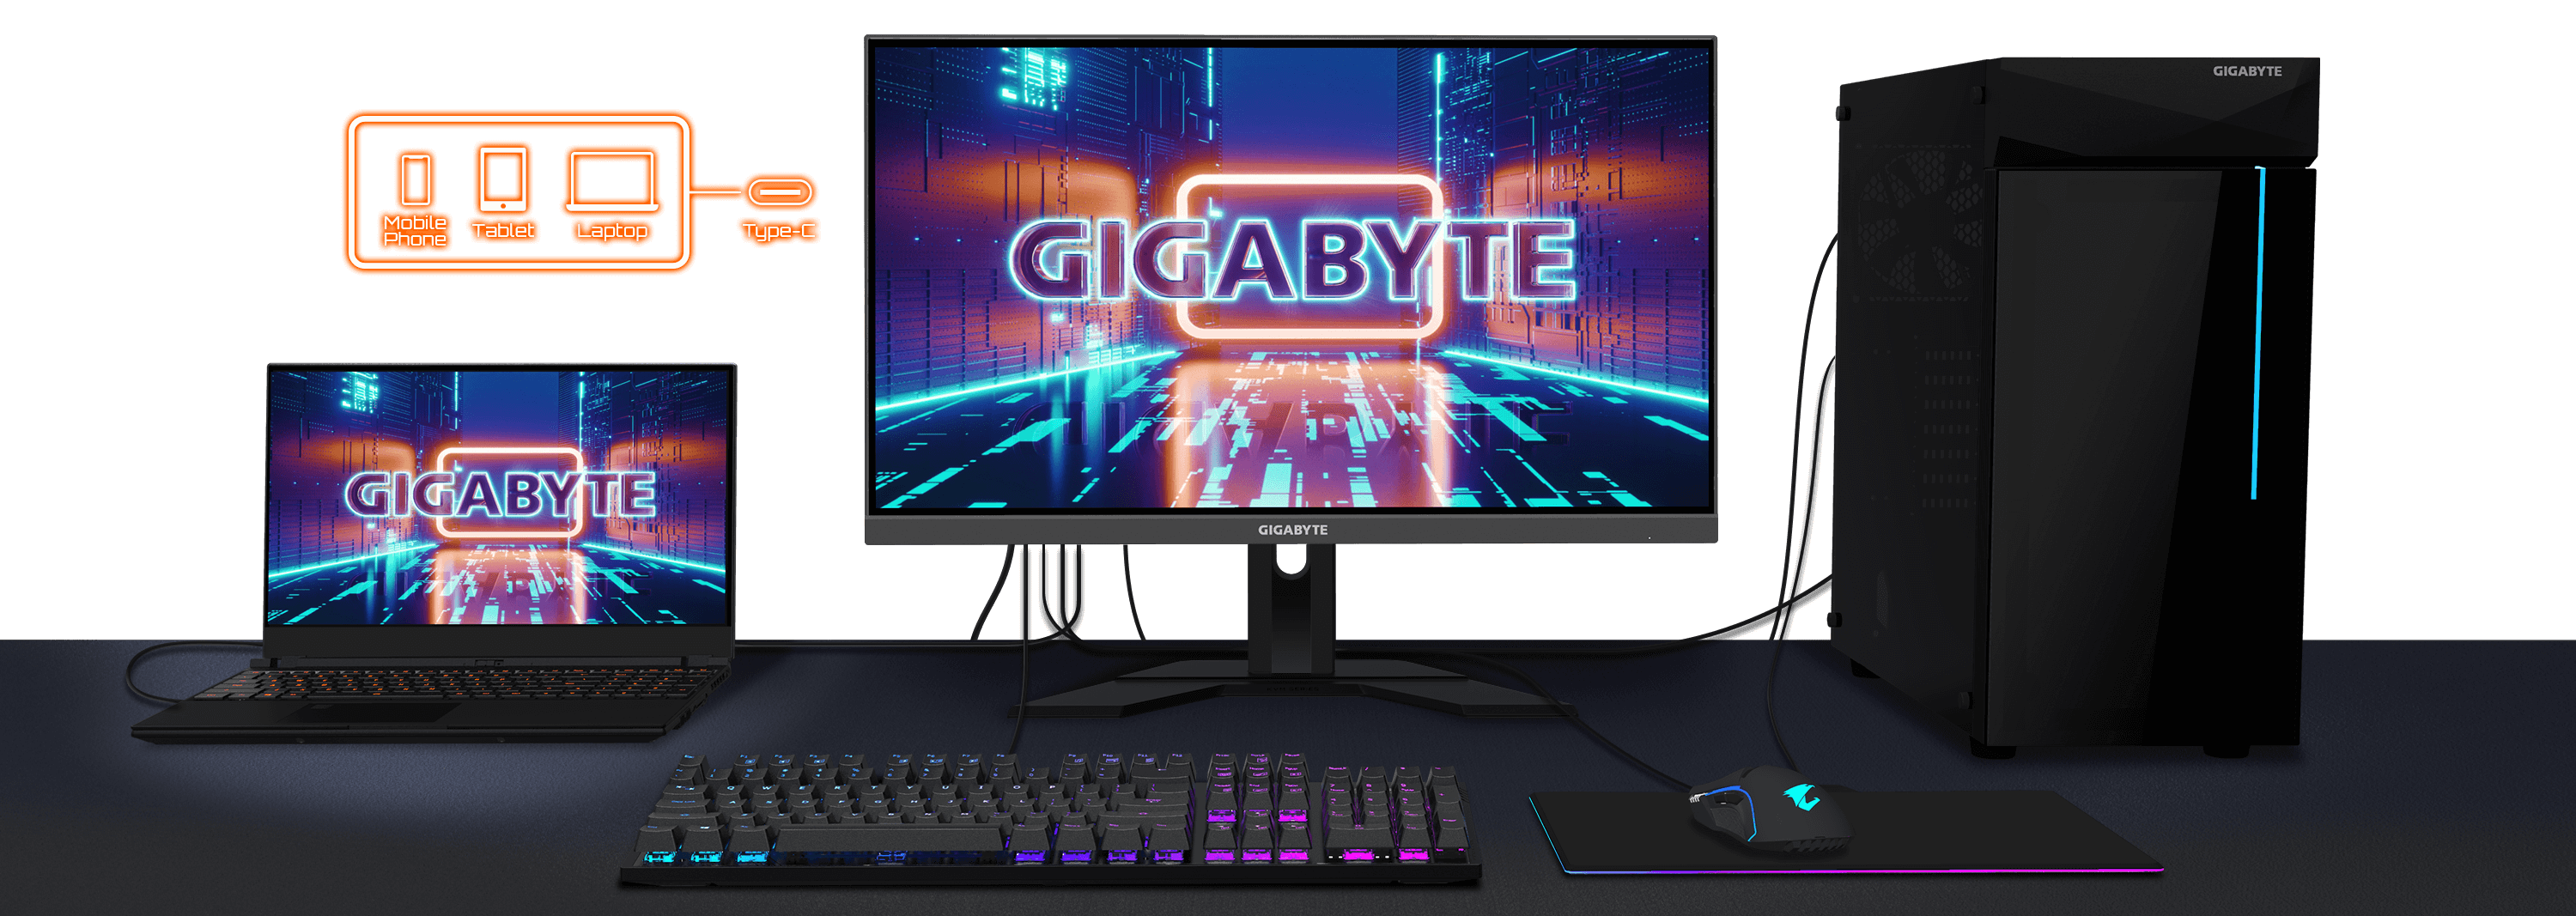 Gigabyte M27U review: The new entry-level 4K - Reviewed, gigabyte m27u 